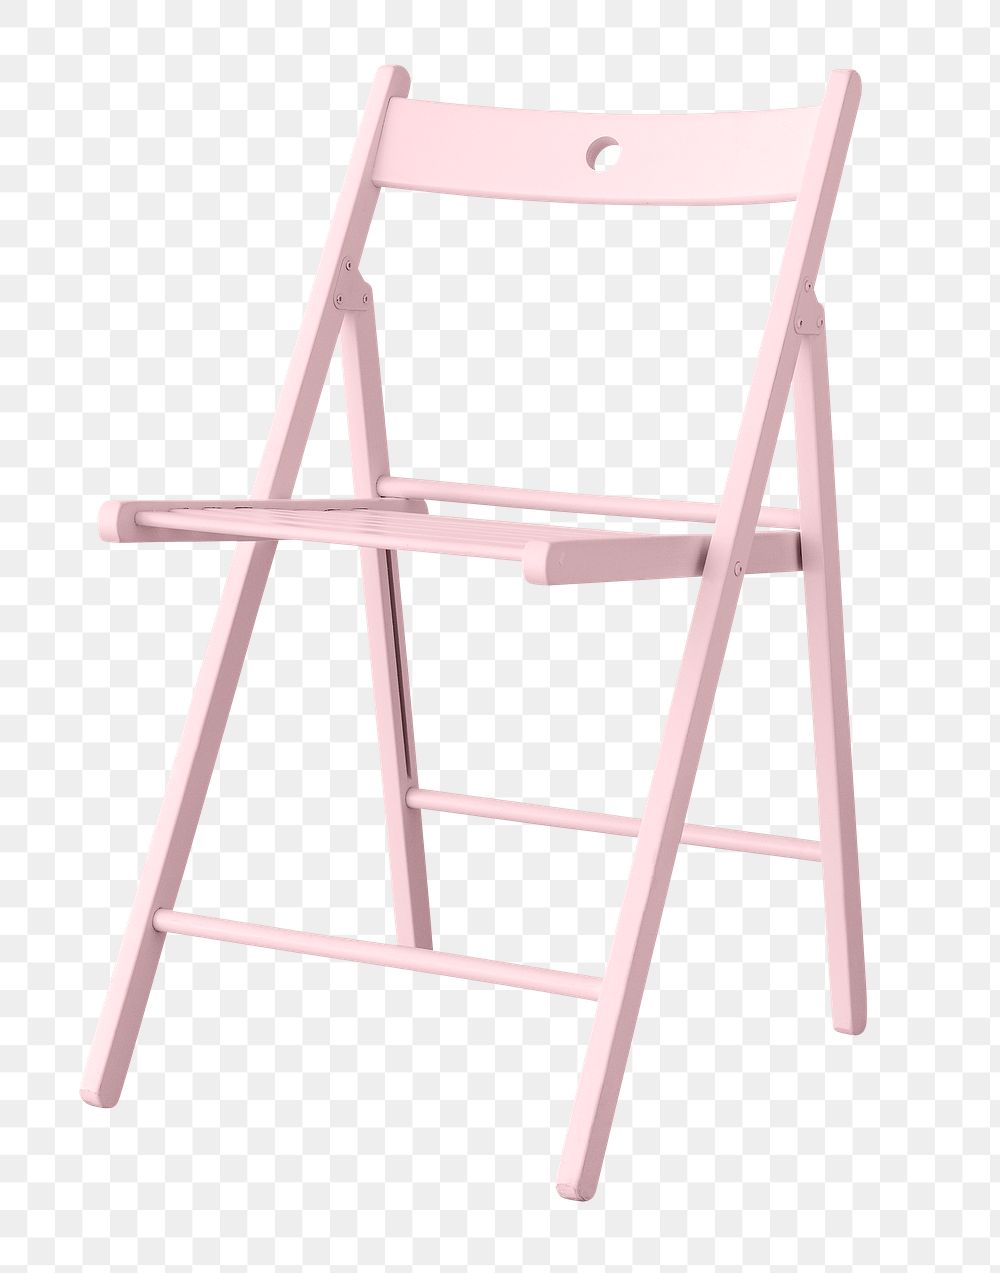 Modern pink chair design element